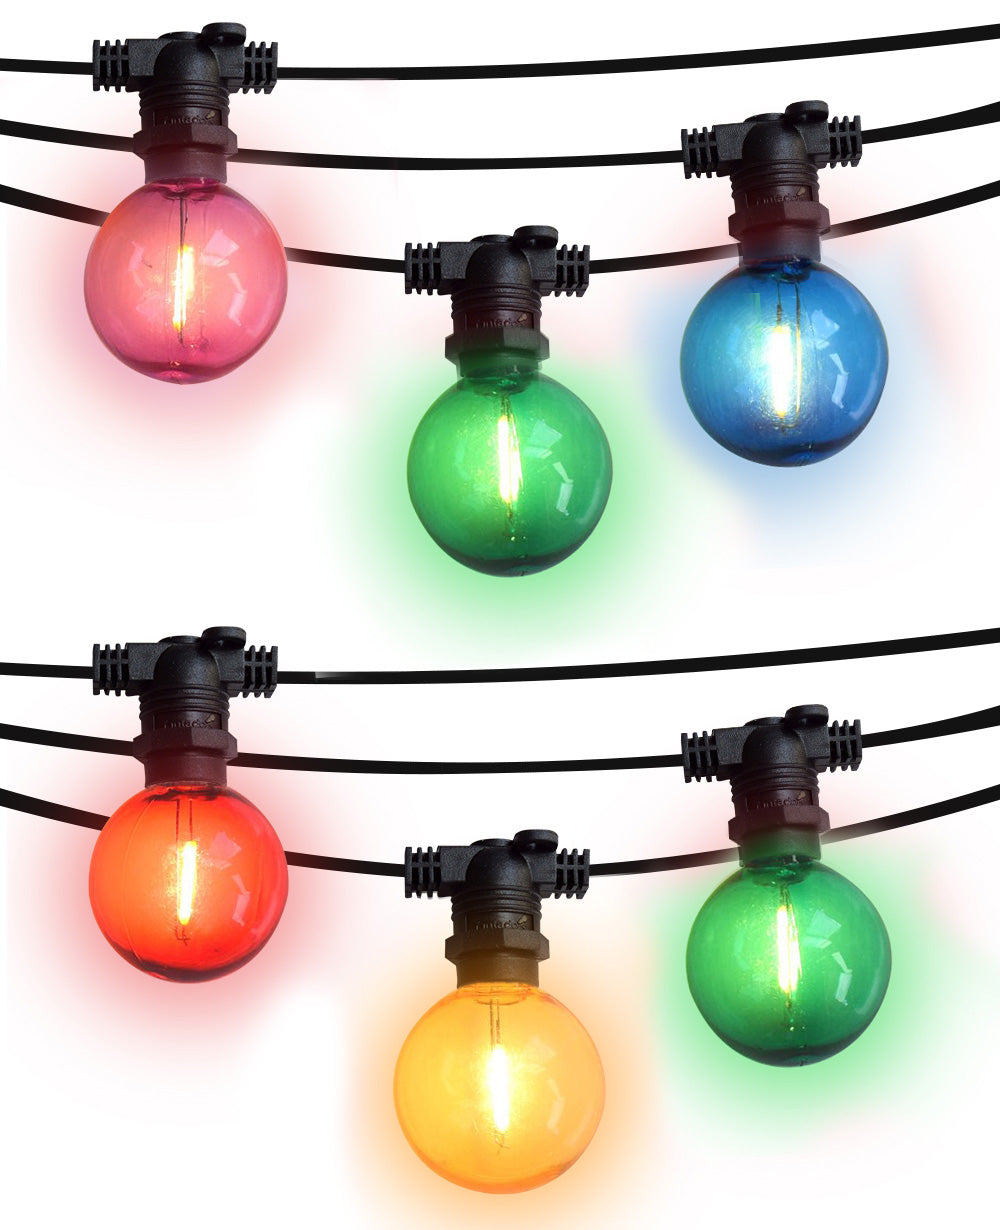 50 Socket Multi-Color Socket Outdoor Commercial String Light Set, 54 FT Black Cord w/ 1-Watt Shatterproof LED Bulbs, Weatherproof